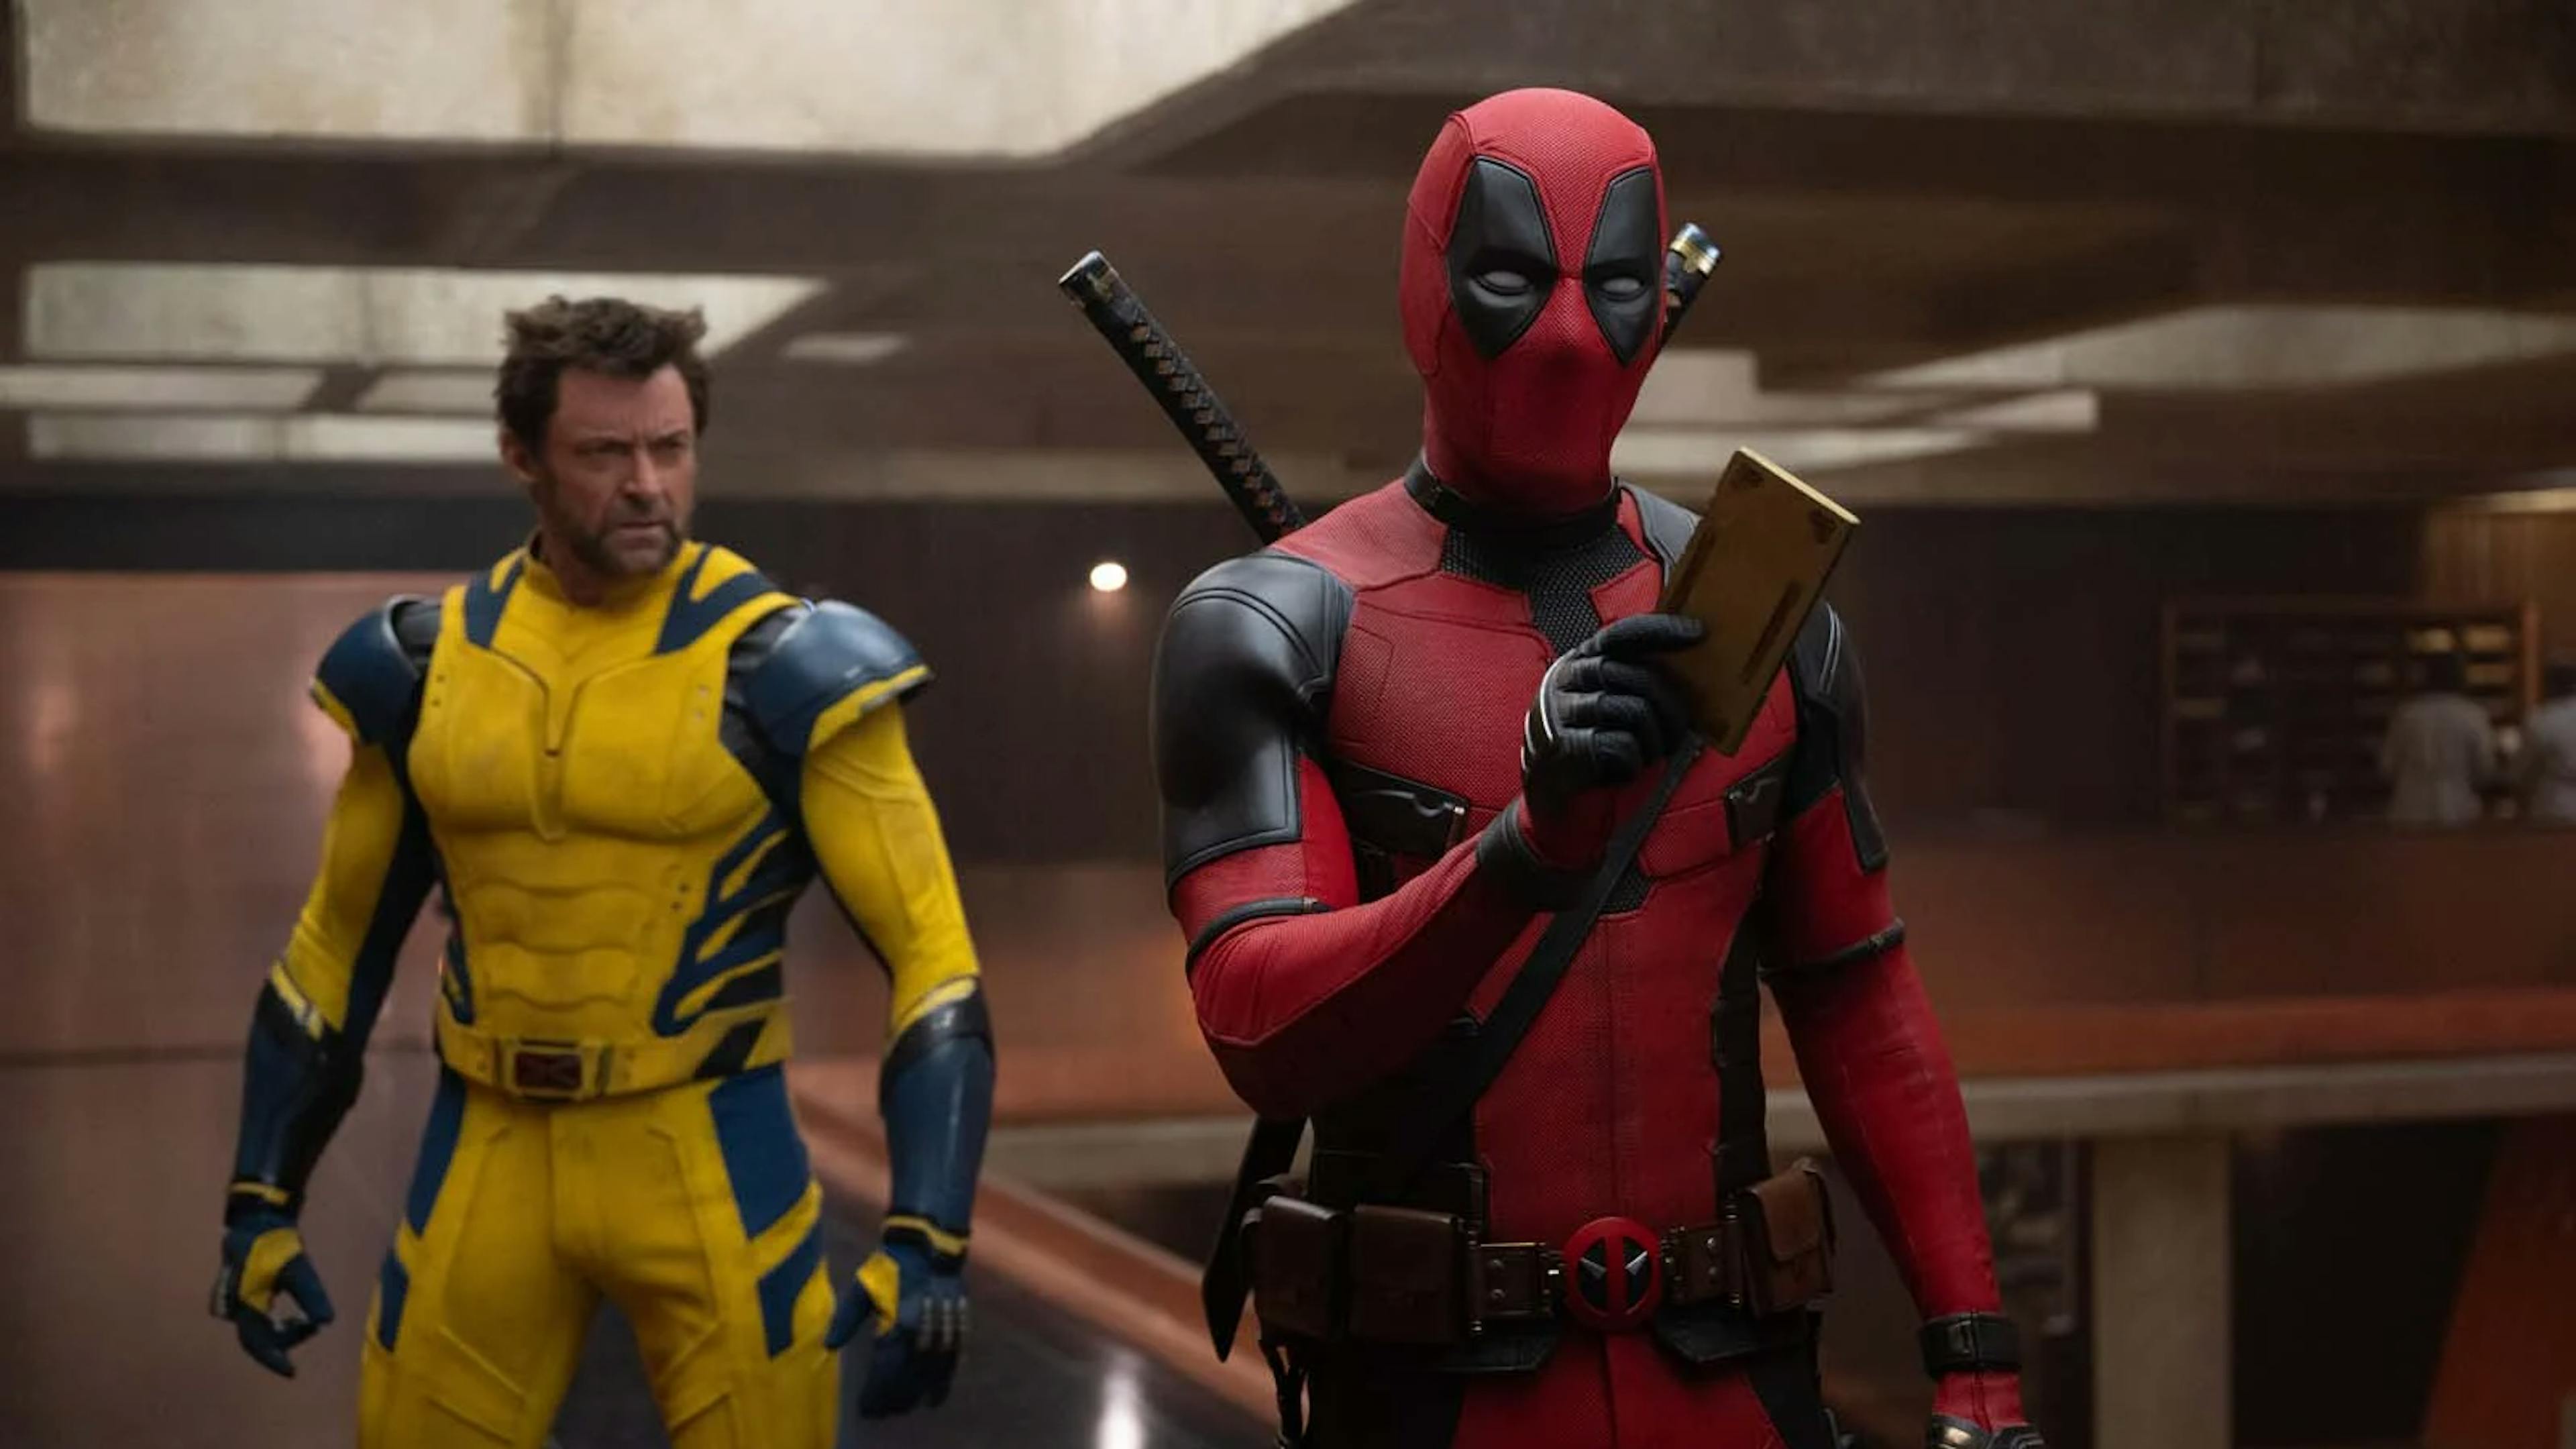 Affiche du film Deadpool & Wolverine